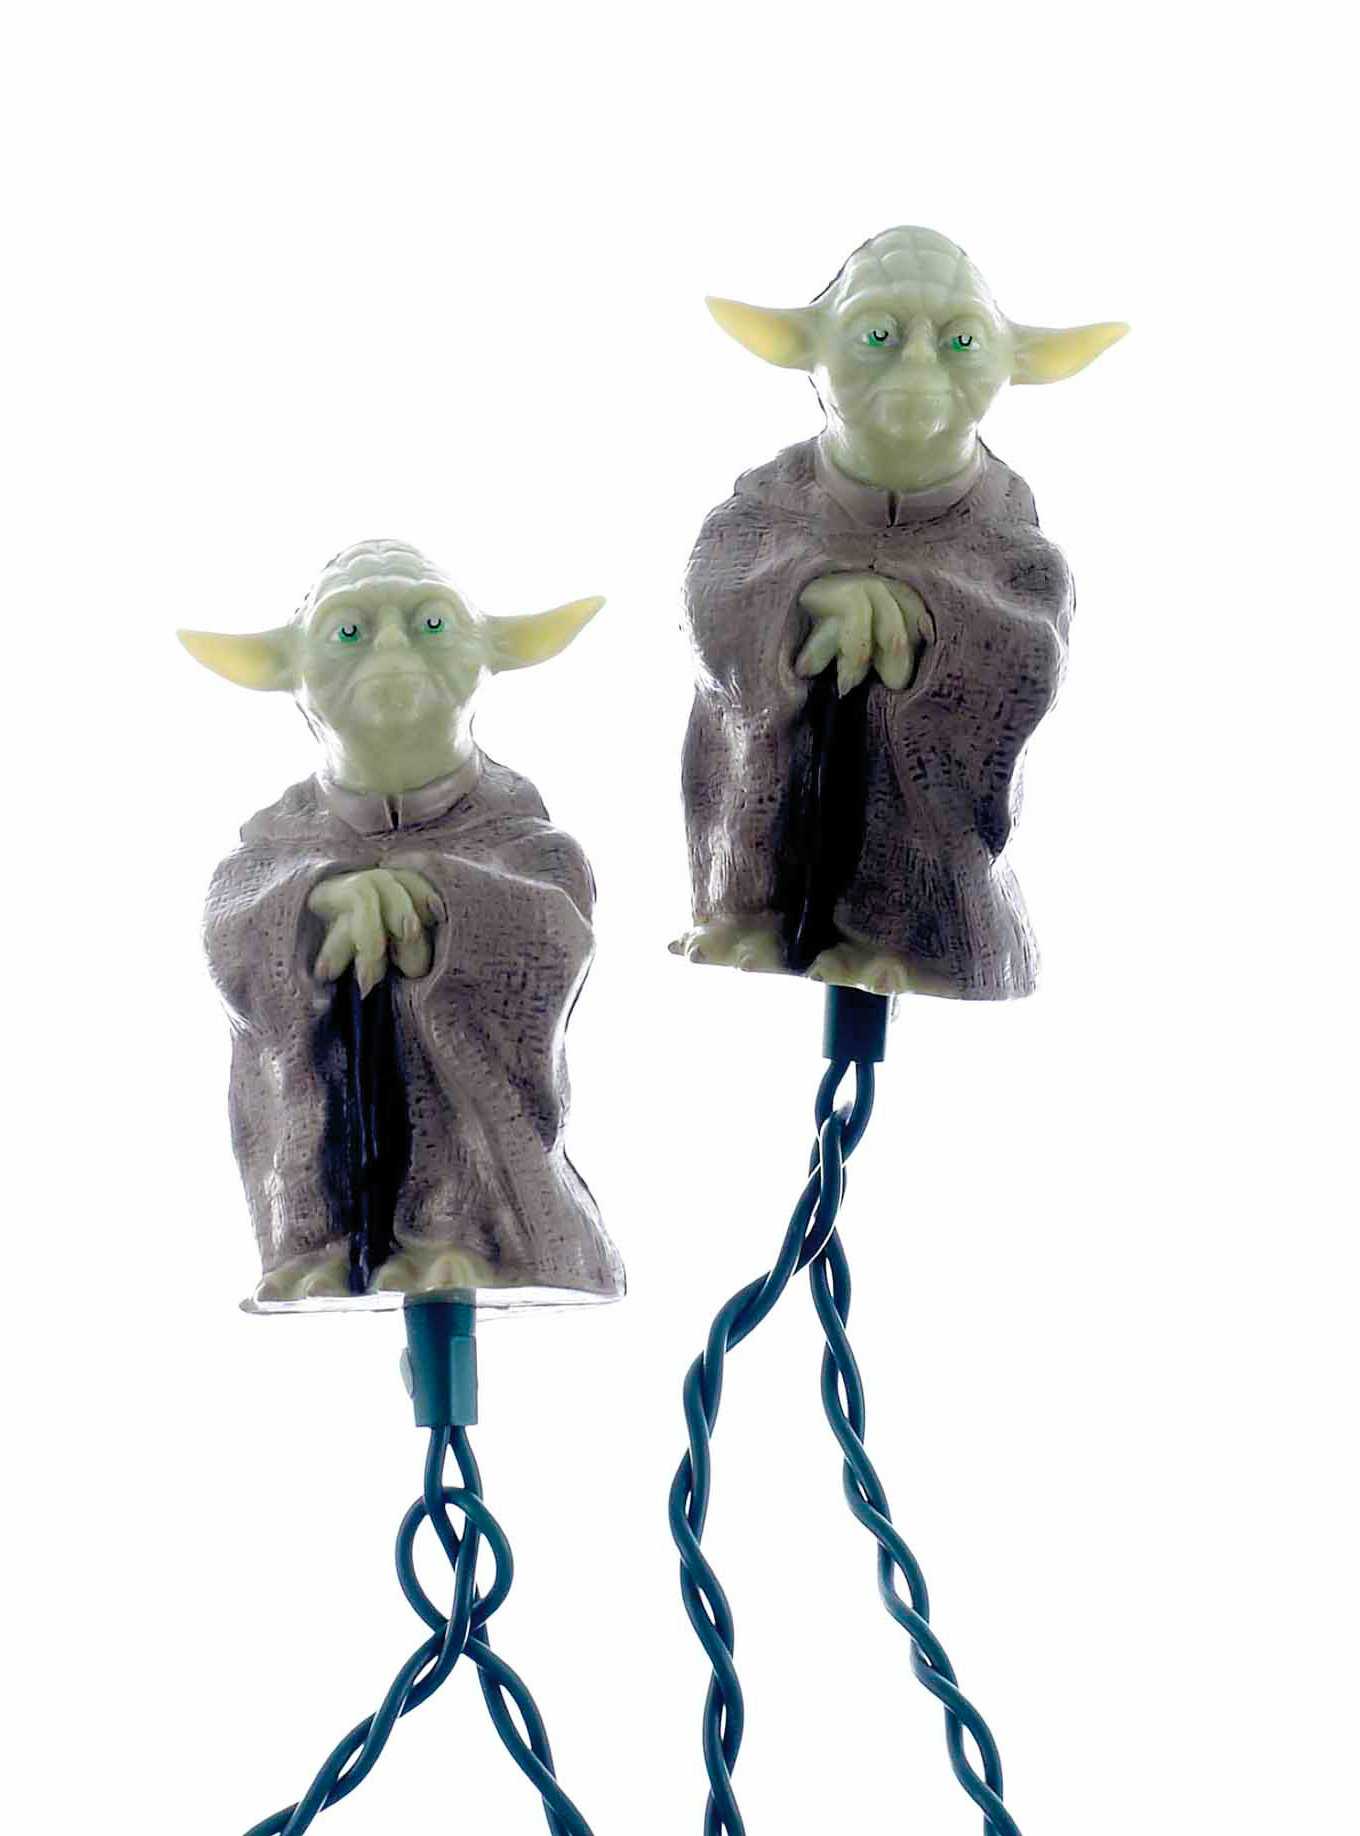 Star Wars Yoda Light Set, , hi-res